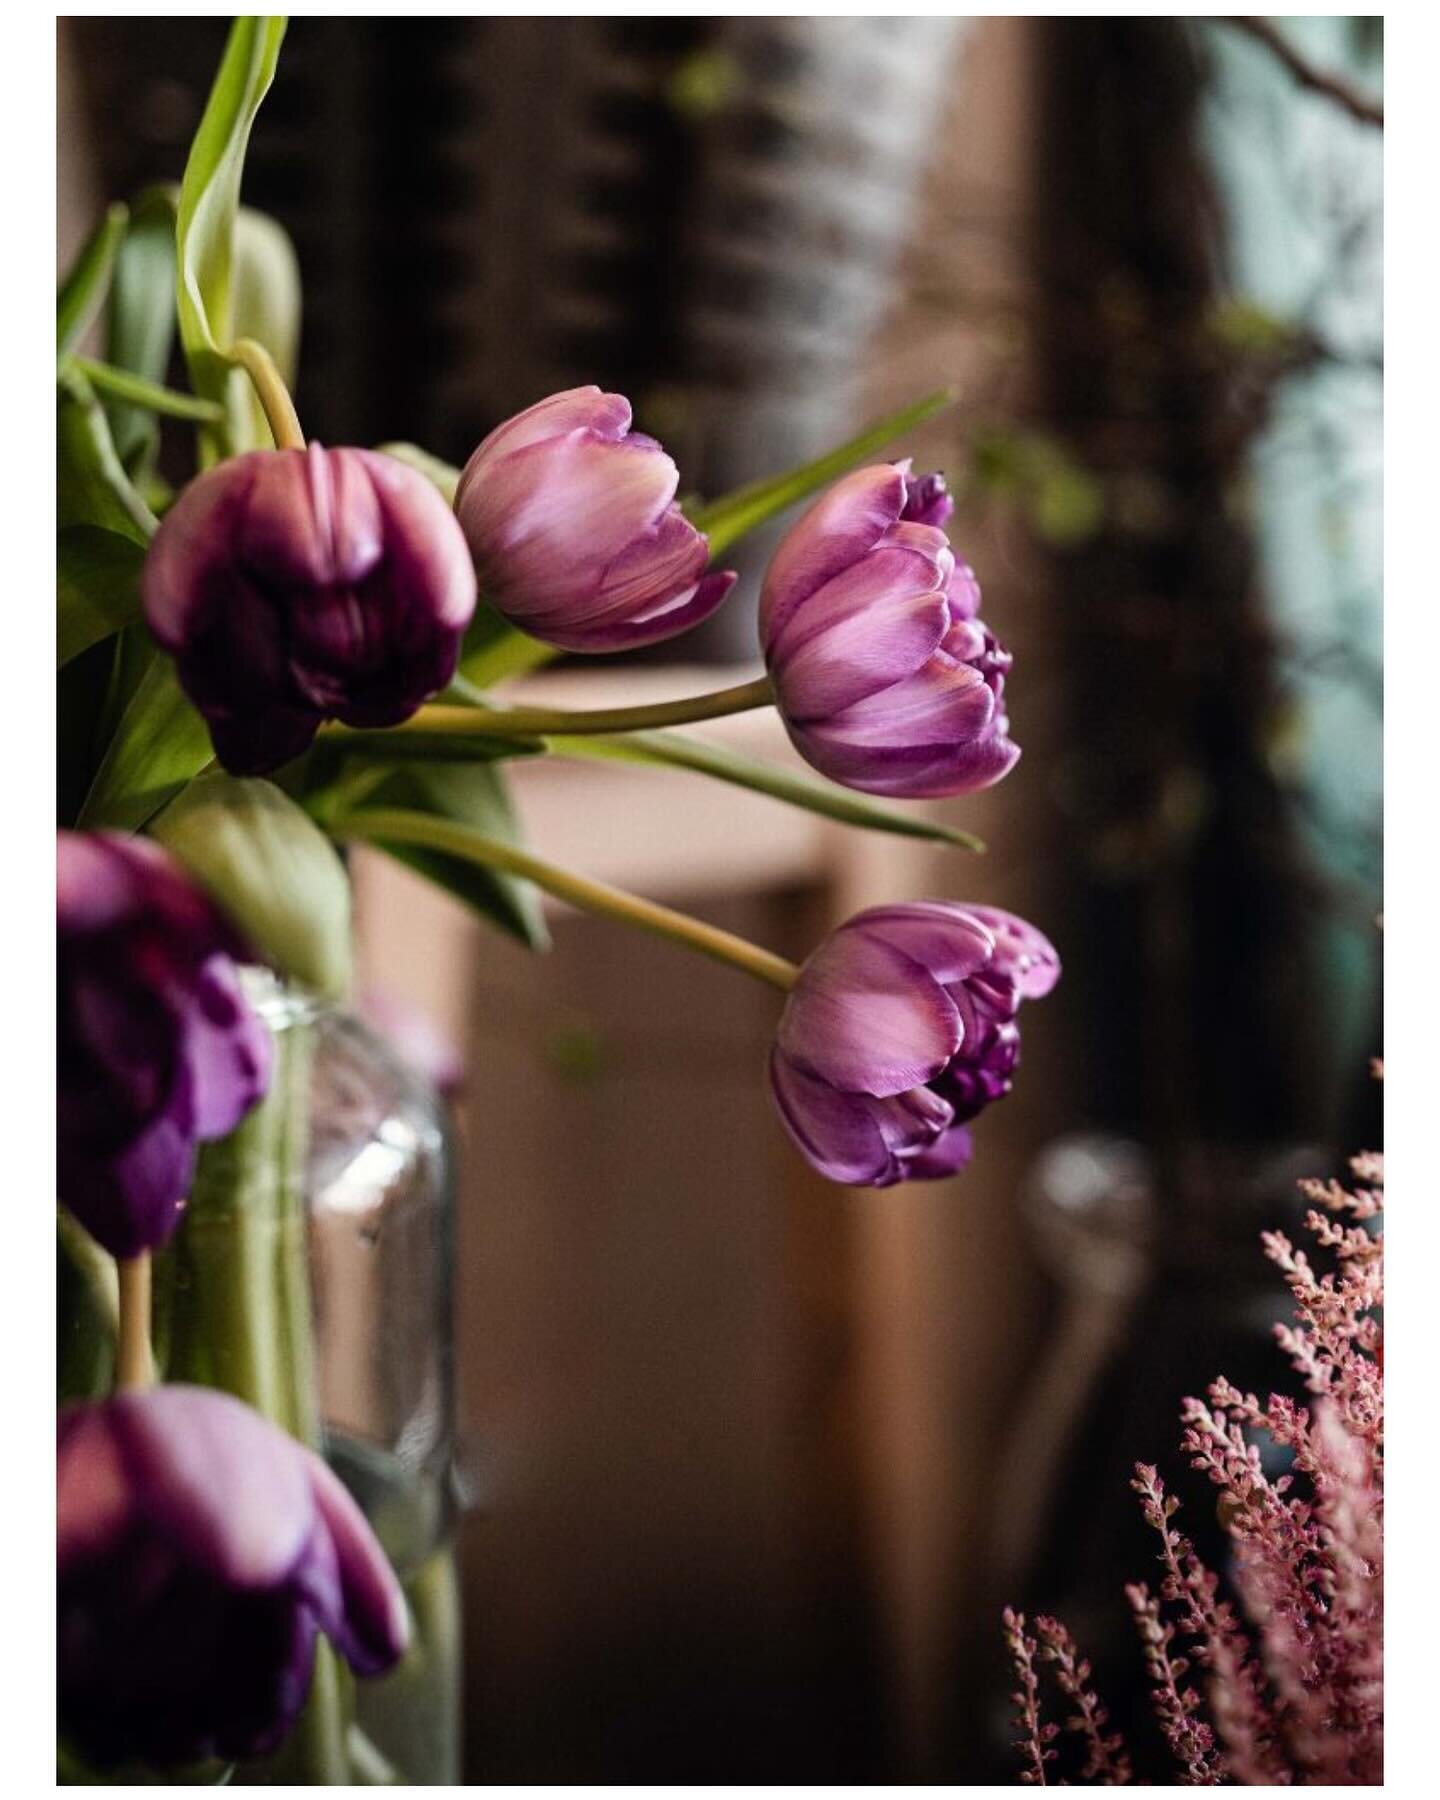 Beauty in the everyday &hearts;️
Happy Easter 💫
.
Tulips @thebathflowerschool 
.
#natureinbloom #floraldelight #flowerlovers #flowerpower #capturingseasonalmoments #justbefloral #floralstories #slowfloralstyle
#naturelovers #naturebrilliance #justbe